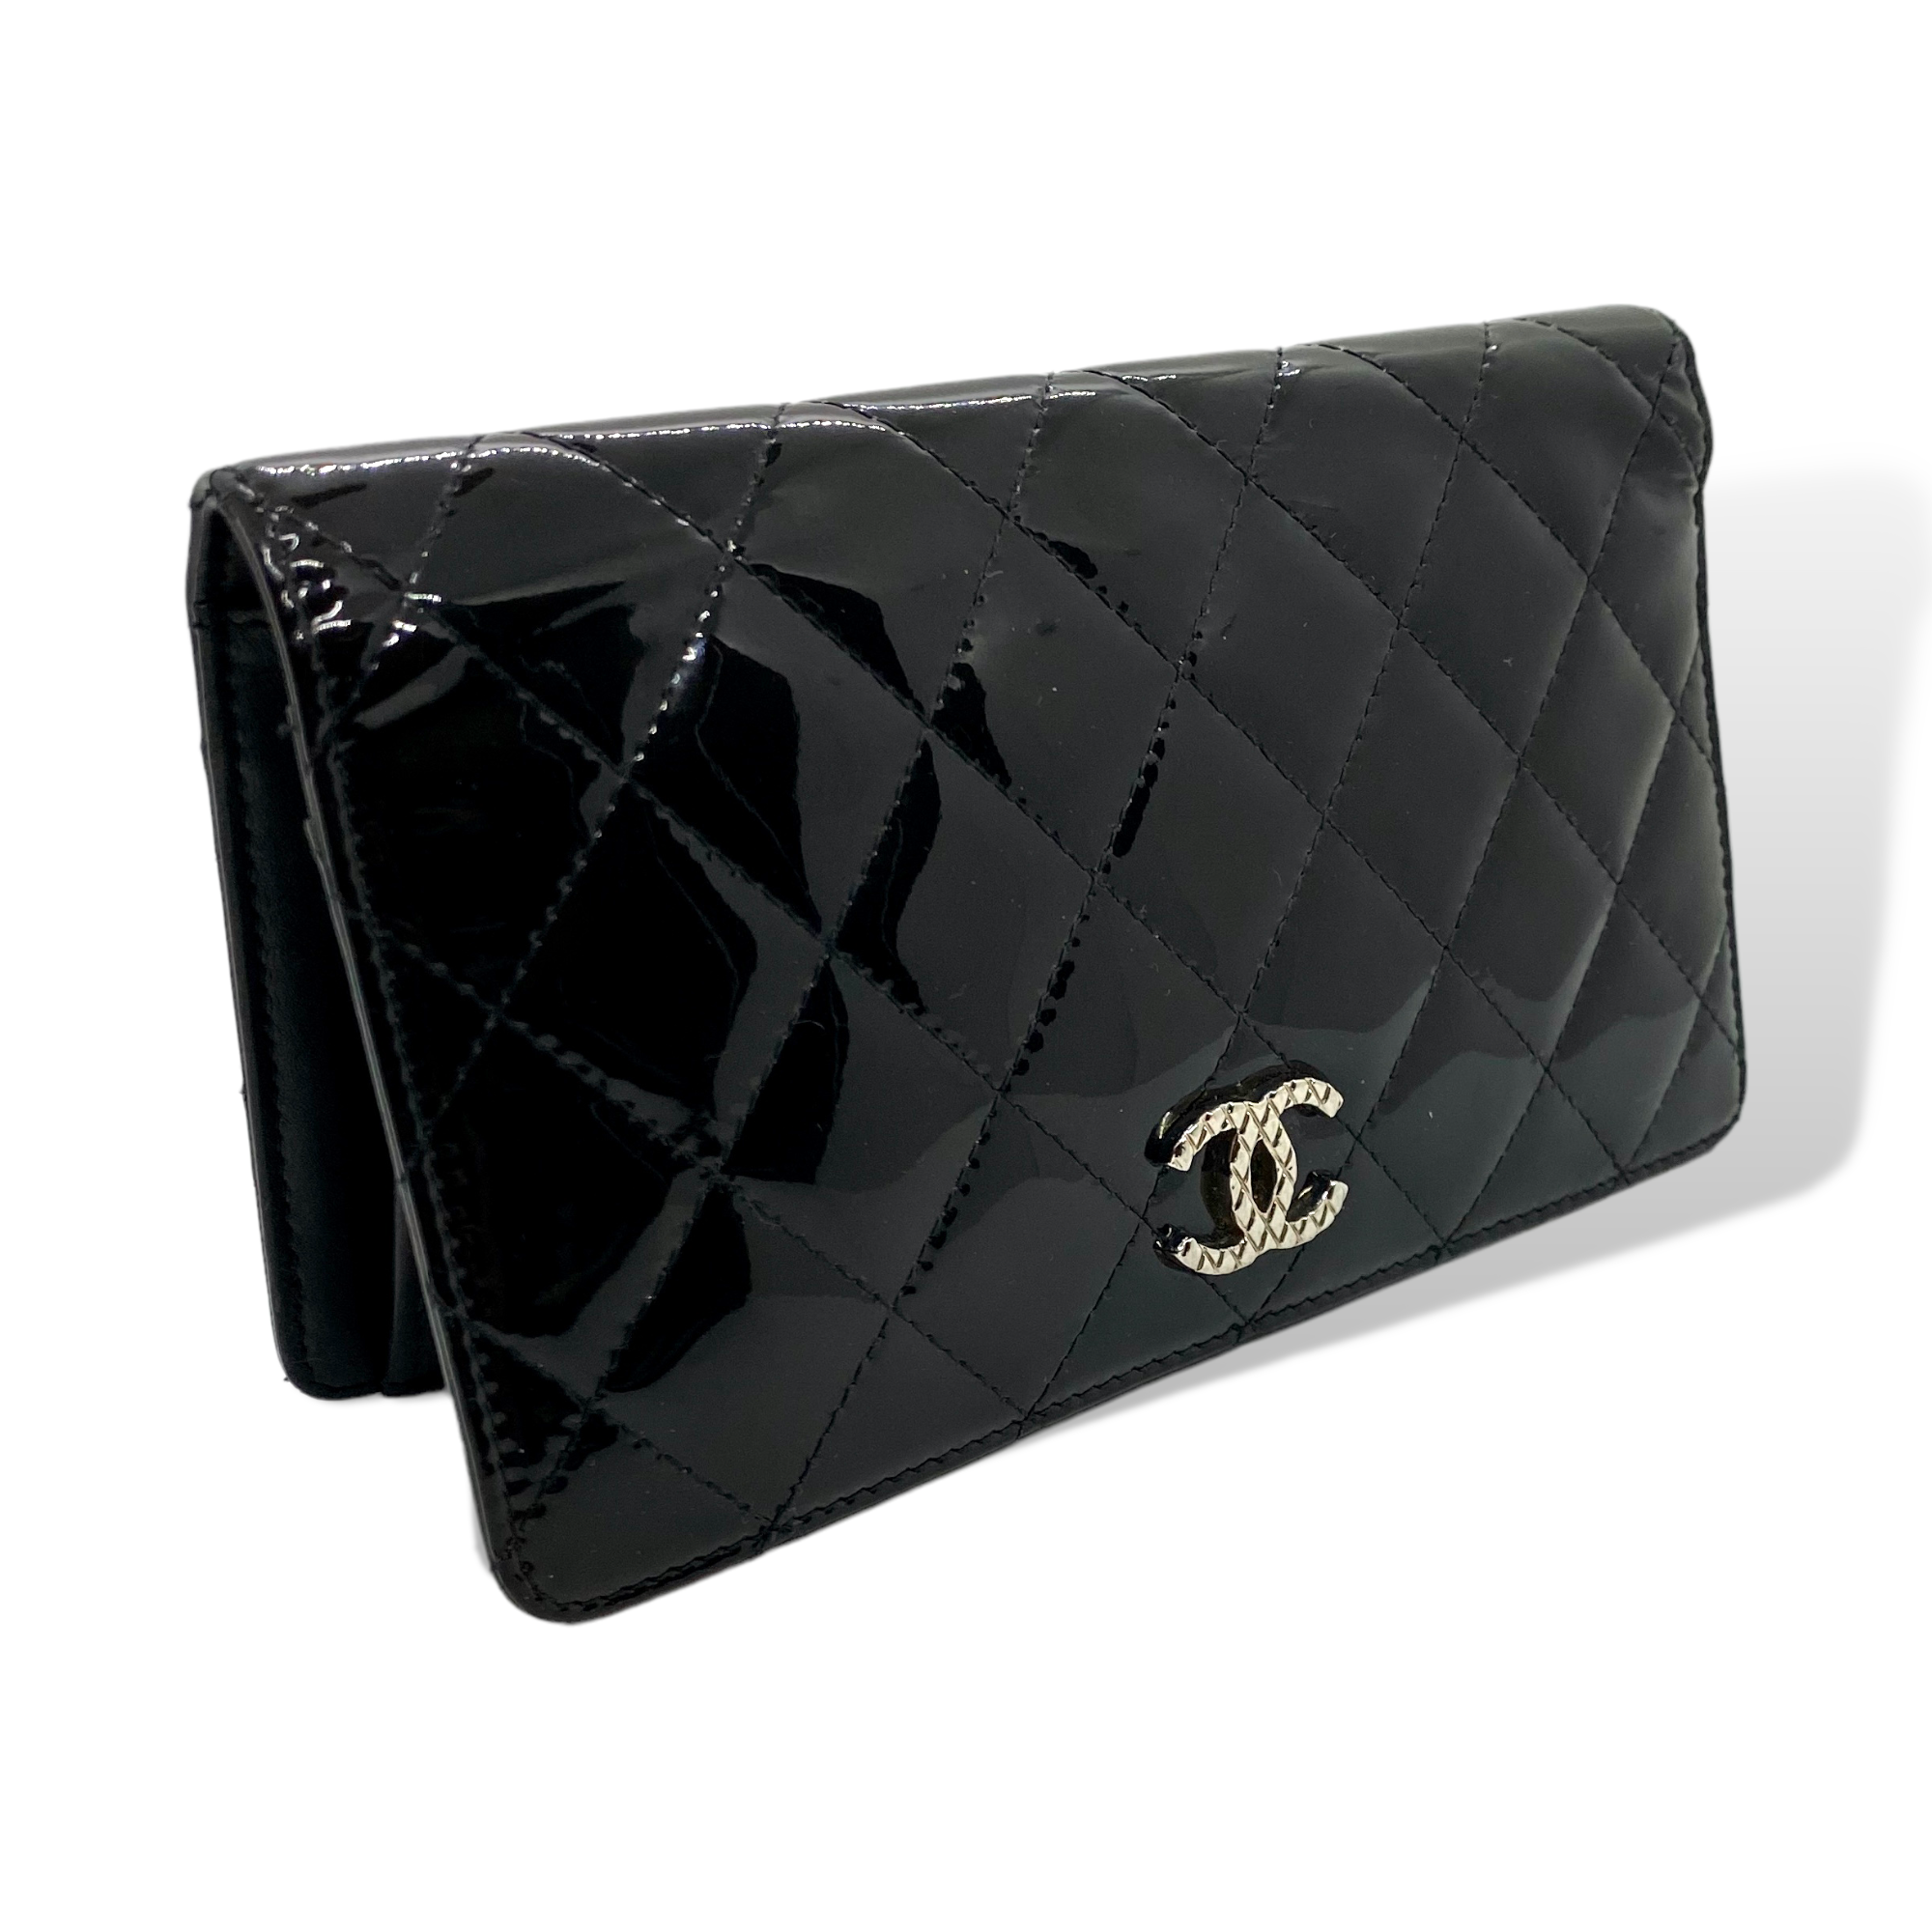 Chanel Black Glazed Calfskin Medium Boy Bag Ruthenium Hardware, 2015  Available For Immediate Sale At Sotheby's